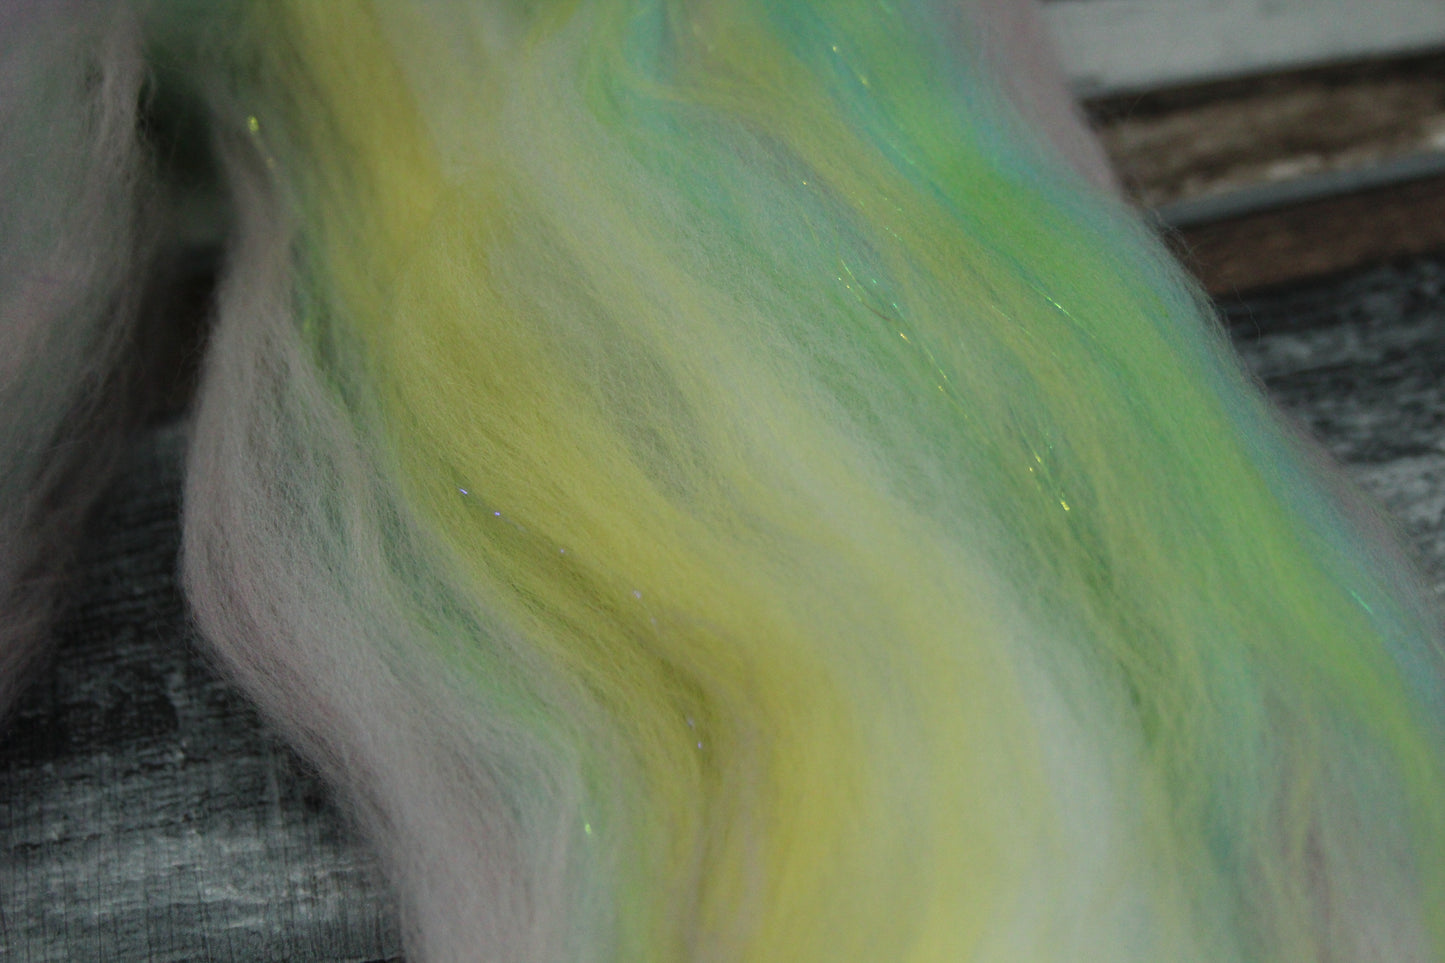 Merino Wool Blend - Pink Turquoise Yellow Purple Green - 32 grams / 1.1 oz  - Fibre for felting, weaving or spinning